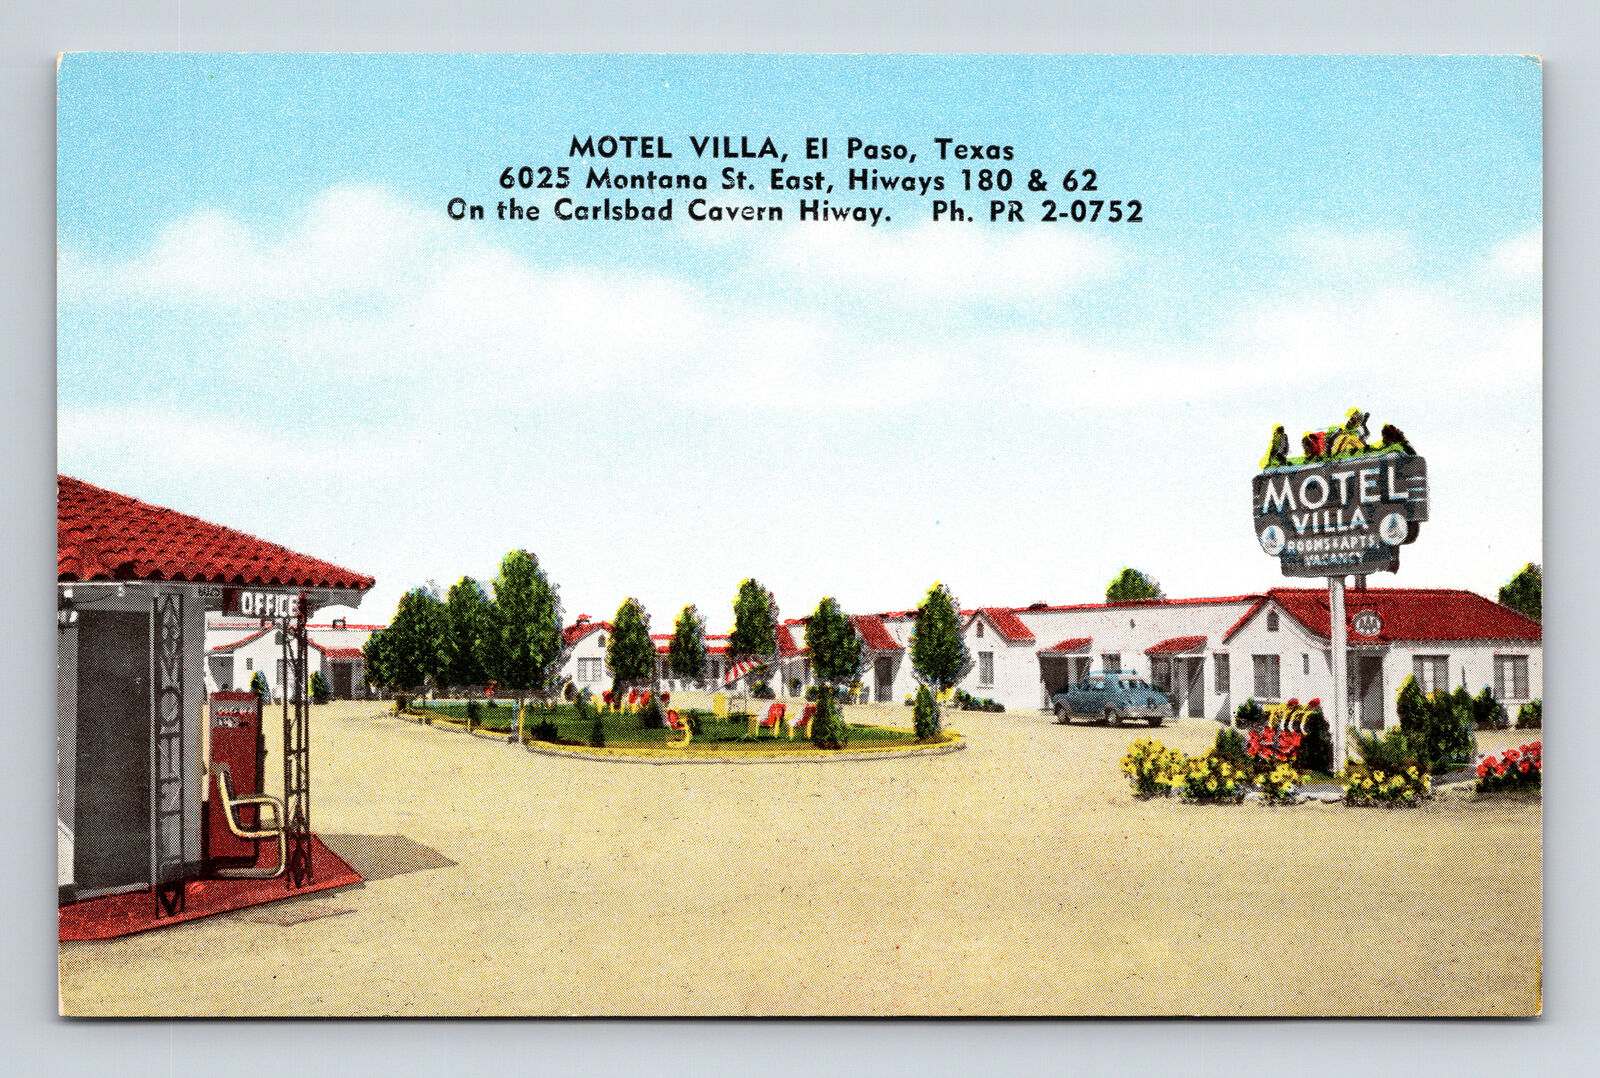 Motel Villa Carlsbad Cavern Hwy El Paso Texas TX Roadside America Postcard